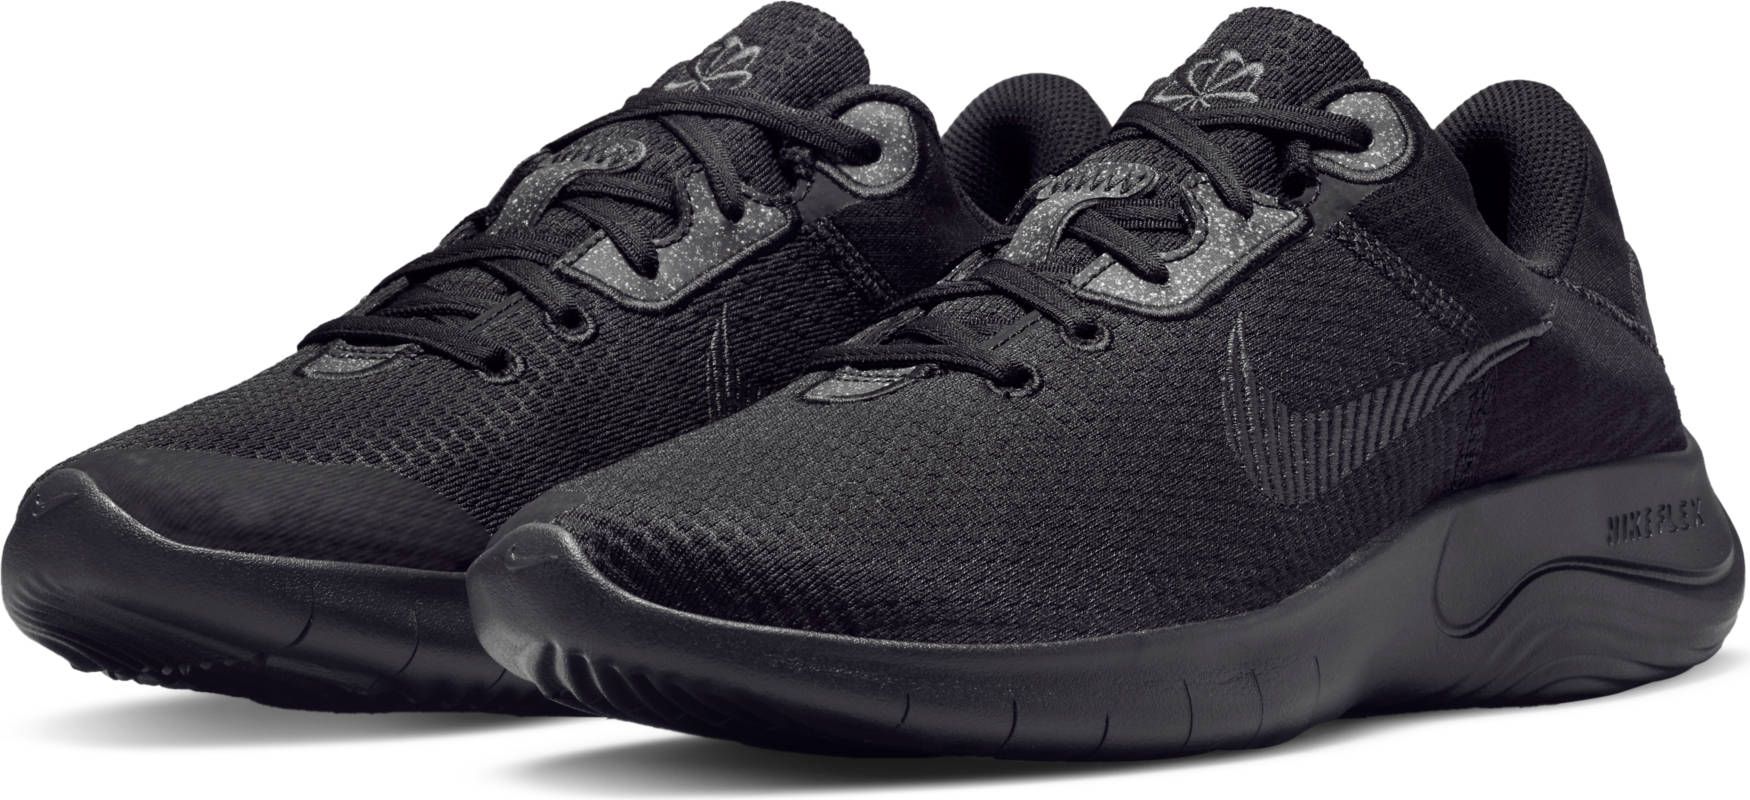 Nike Flex Experience Men's Running Shoes